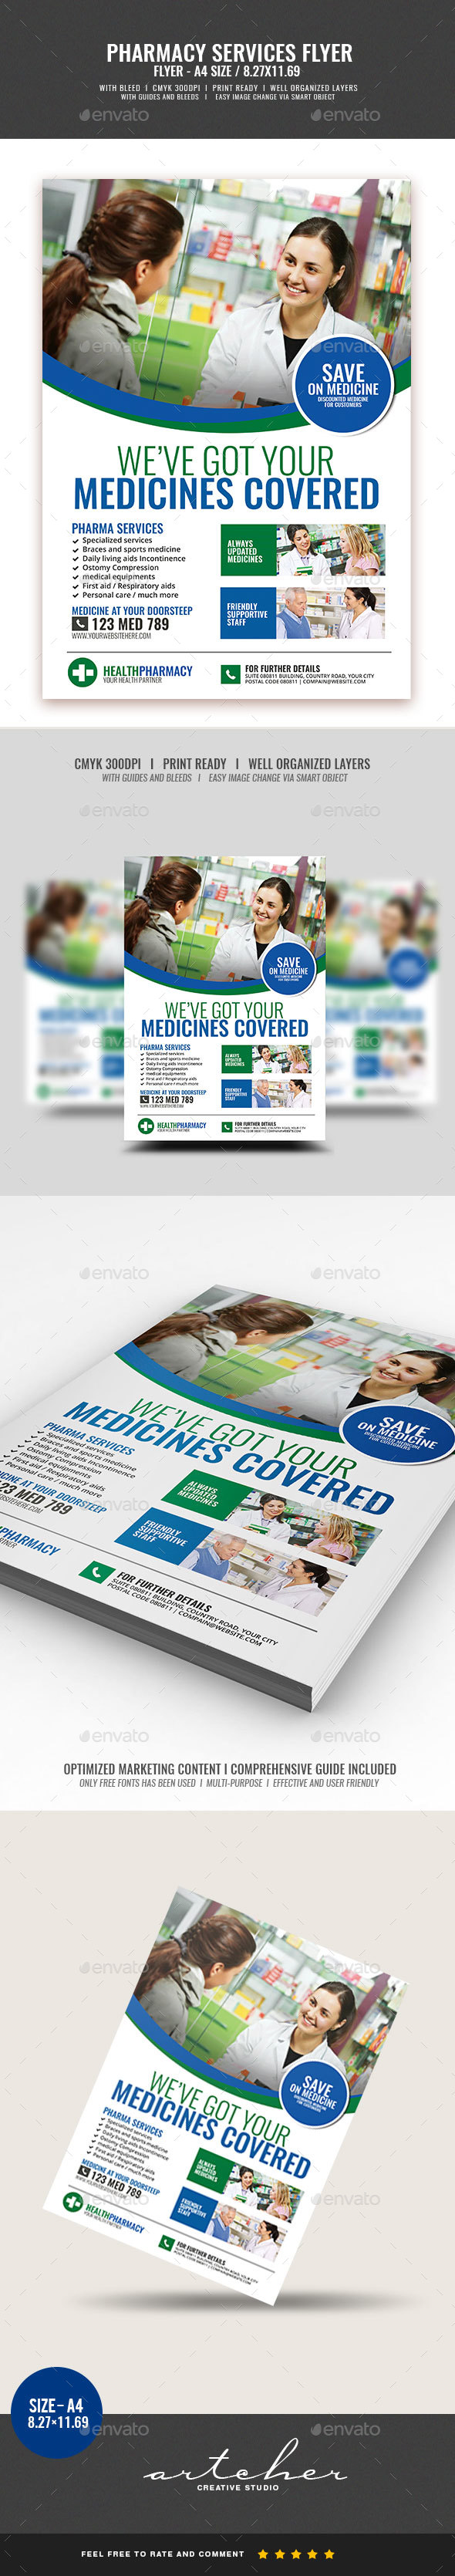 Pharmacy Services Flyer v2